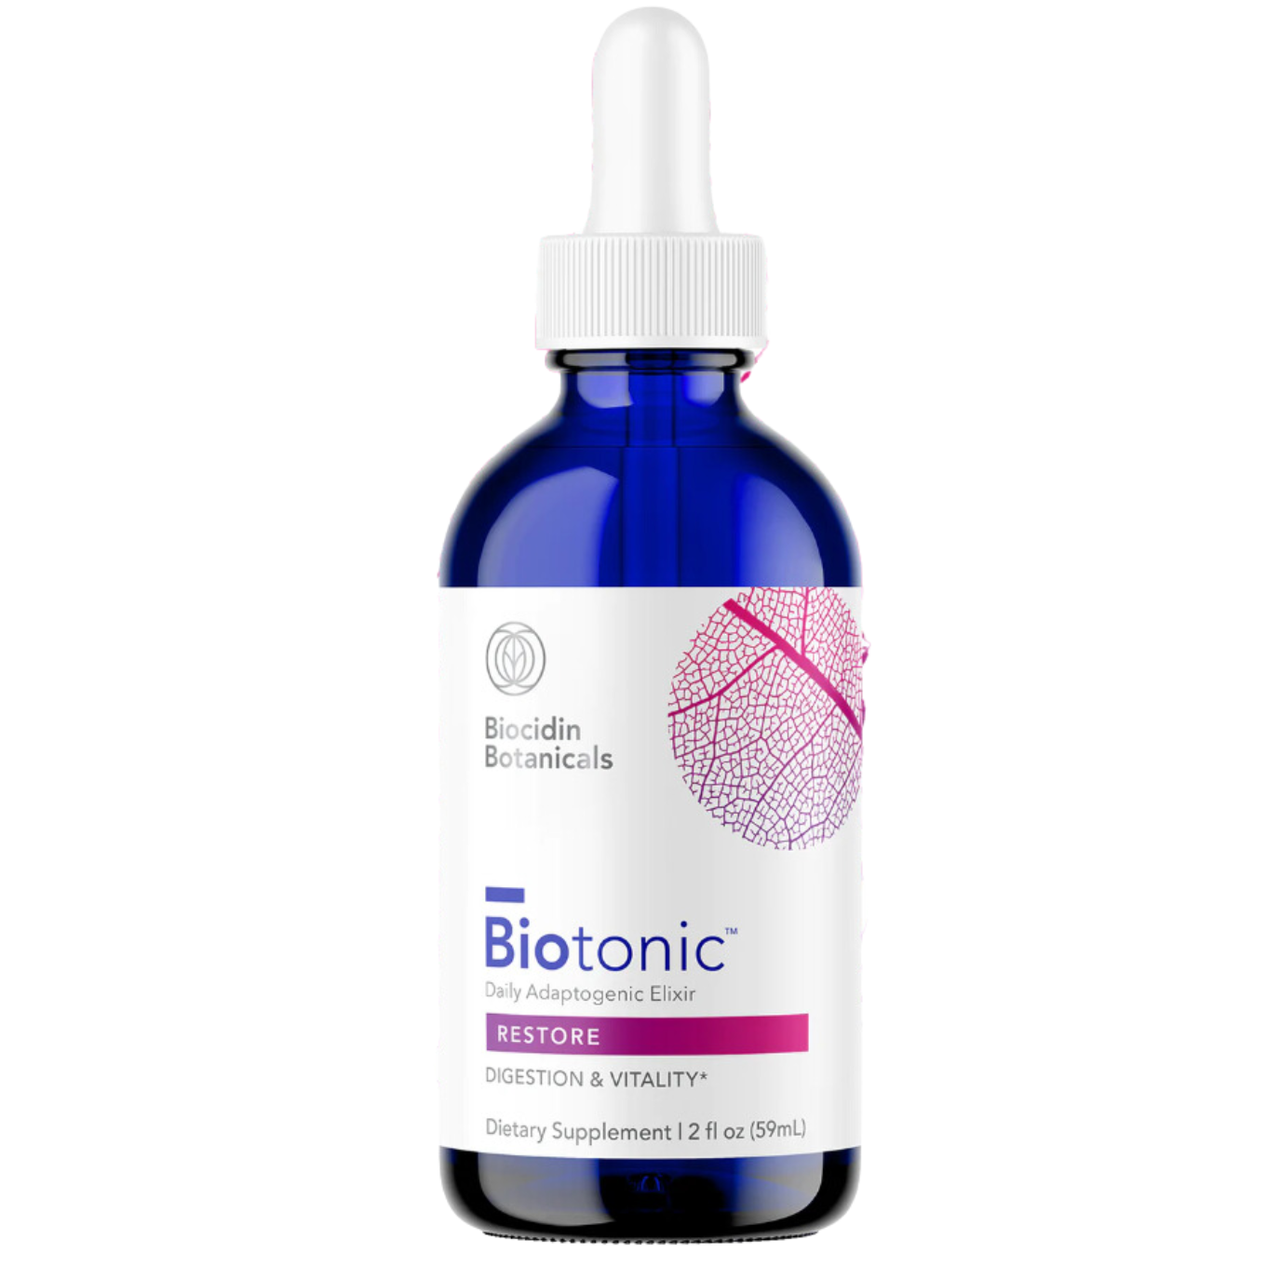 Biotonic - Biocidin Botanicals